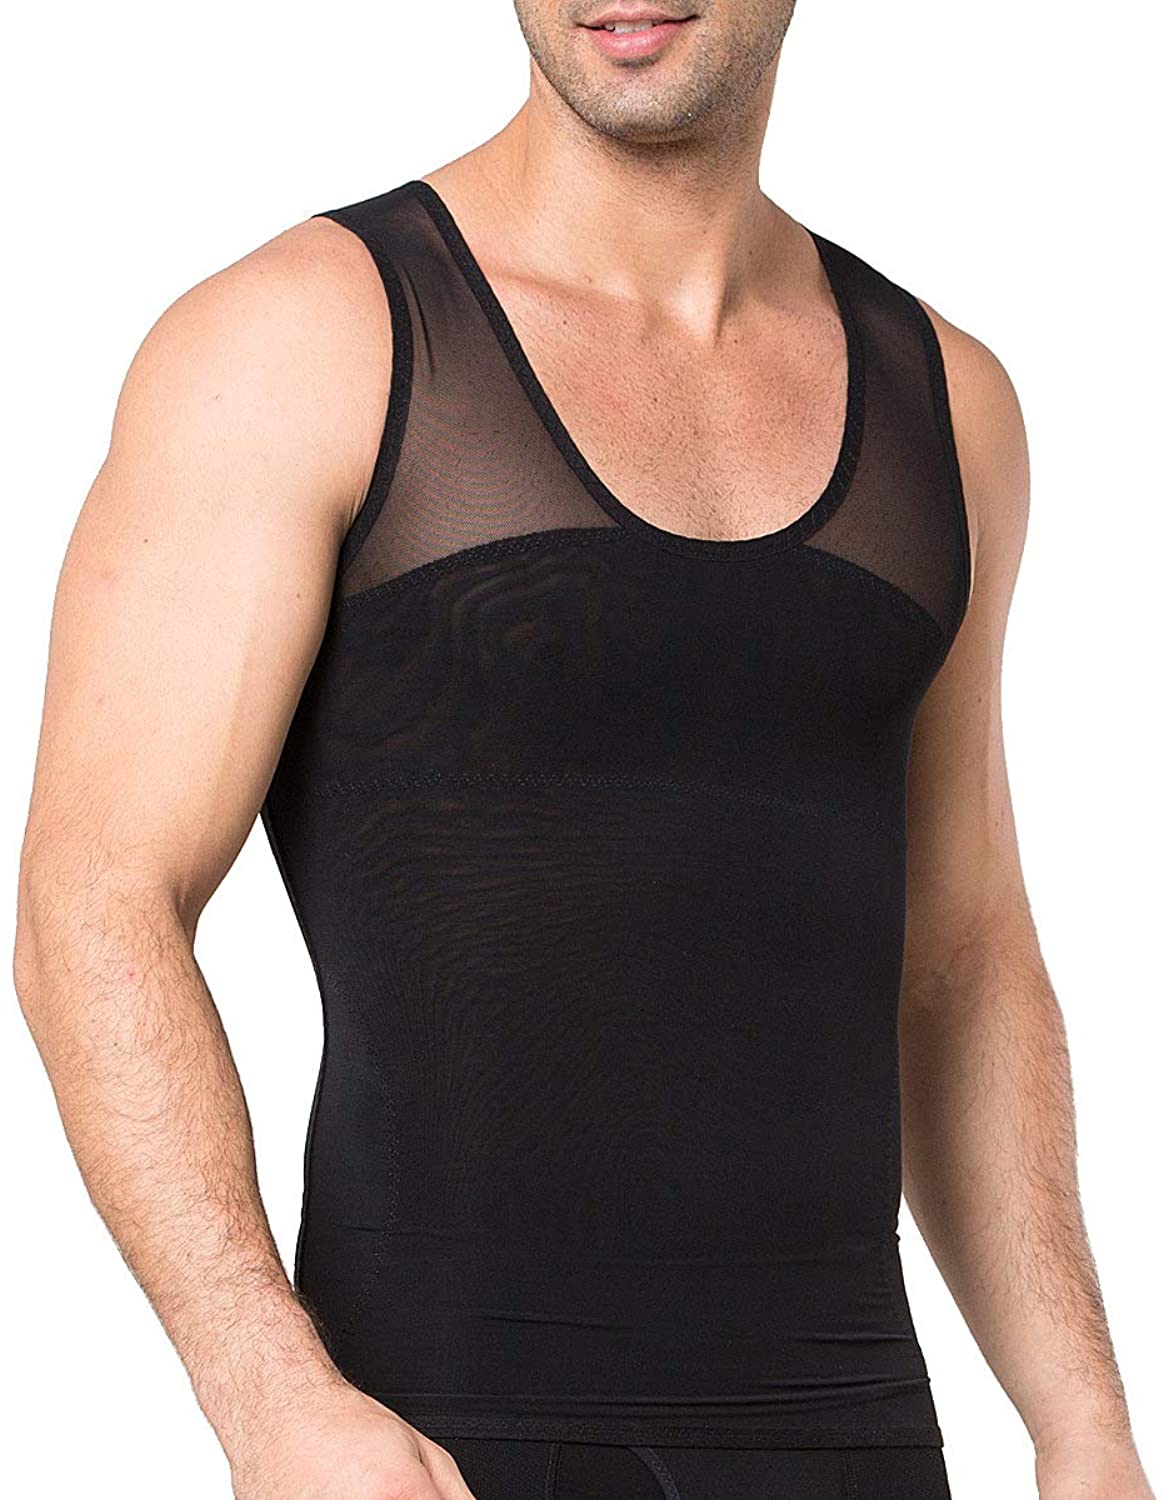 LARDROK Men's Breathable Slimming Body Shaper Compression Shirt Girdles ...